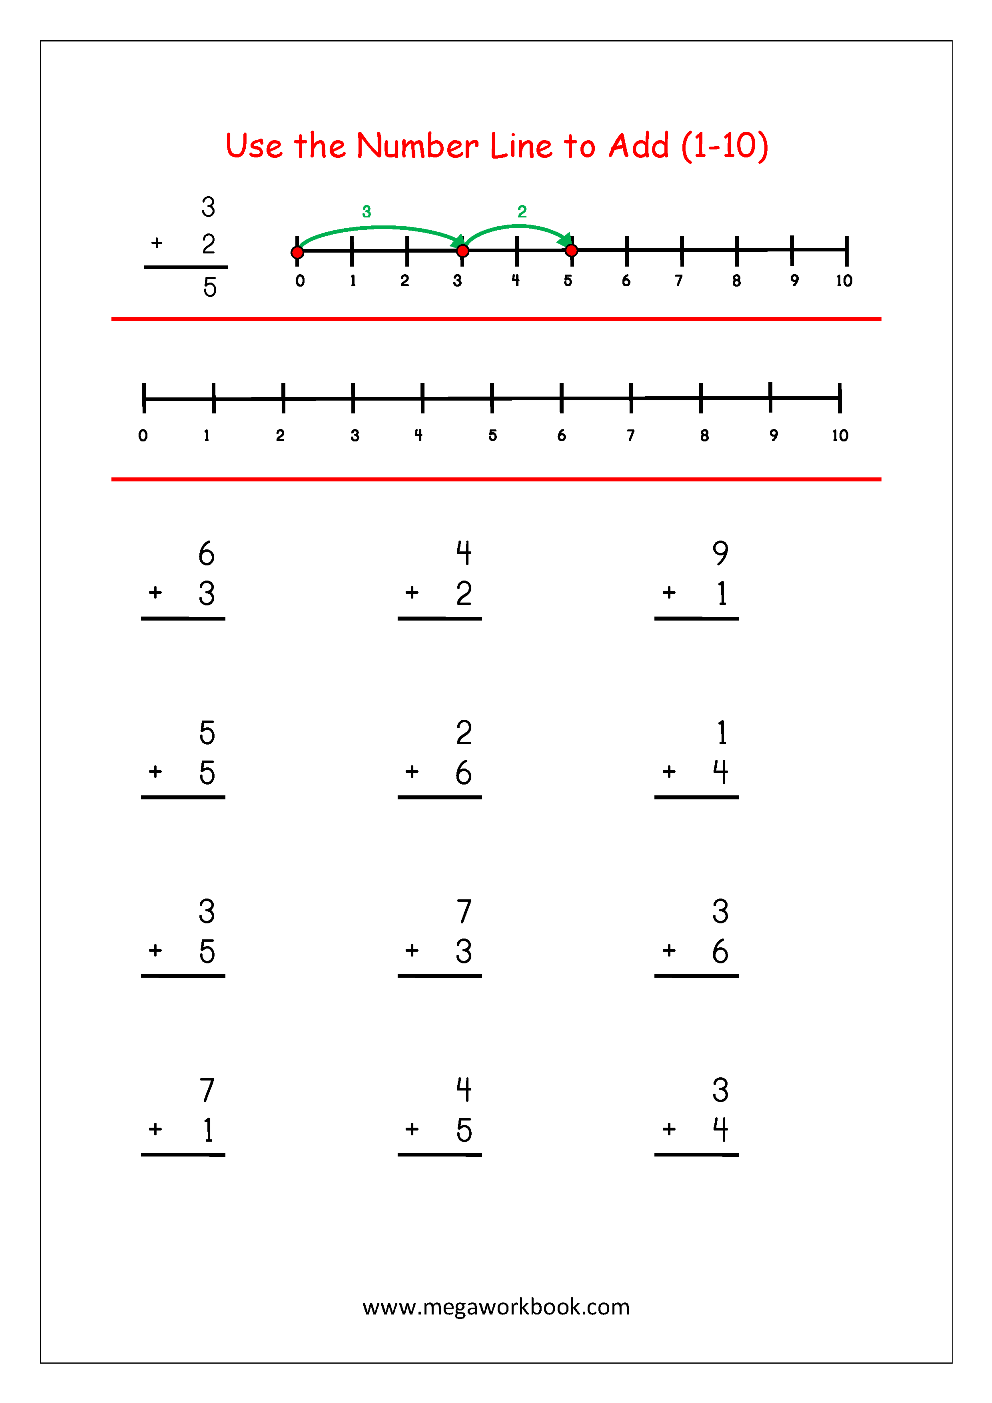 free-printable-number-addition-worksheets-1-10-for-kindergarten-and-grade-1-addition-on